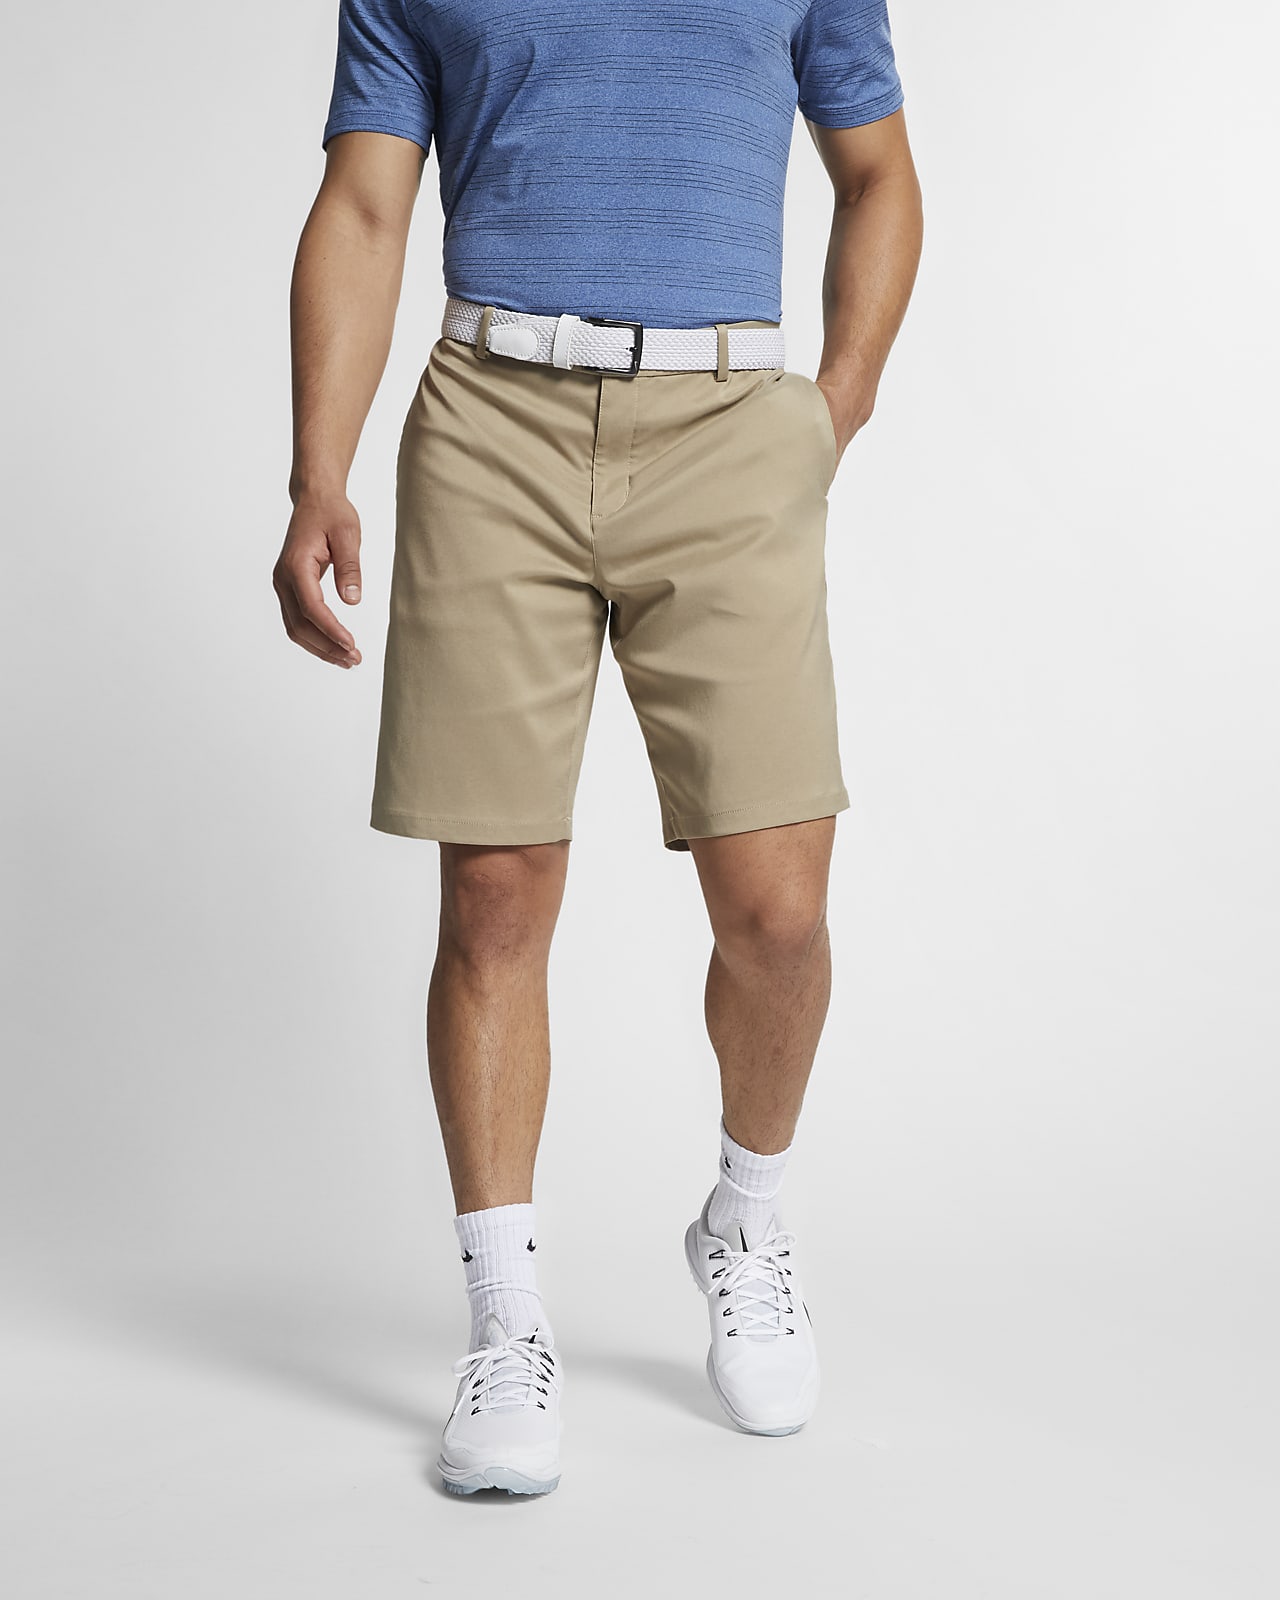 men's golf shorts nike flex